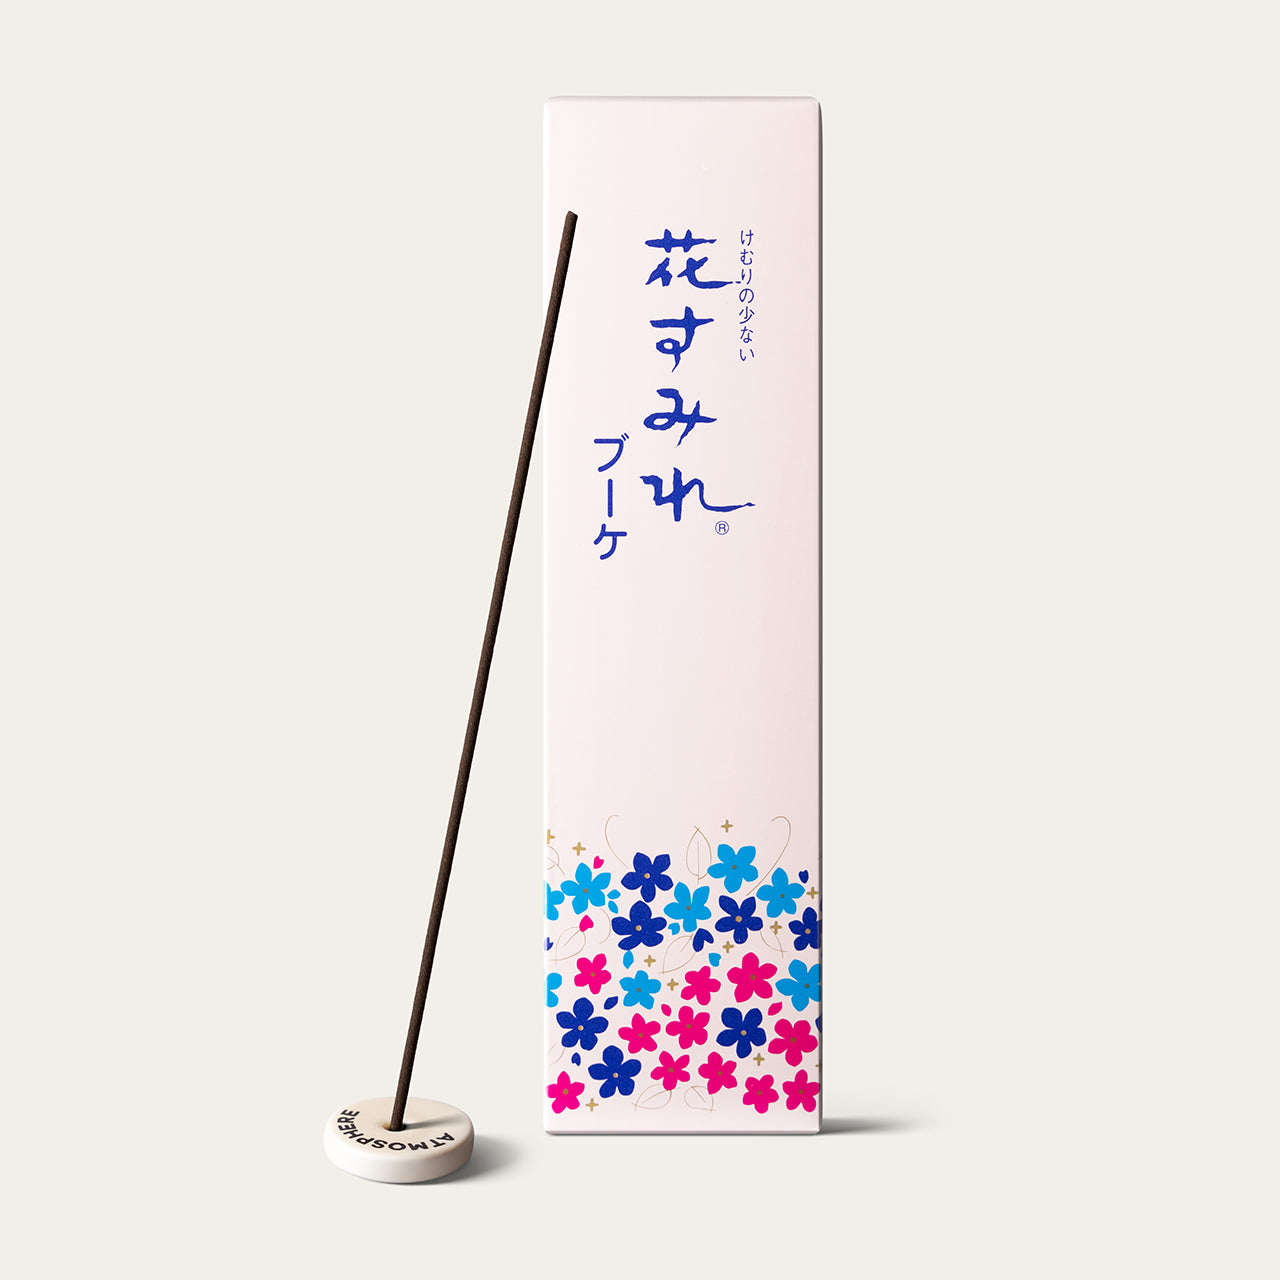 Gyokushodo Hana Sumire Bouquet Violet Low Smoke Japanese incense sticks (25 sticks) with Atmosphere ceramic incense holder